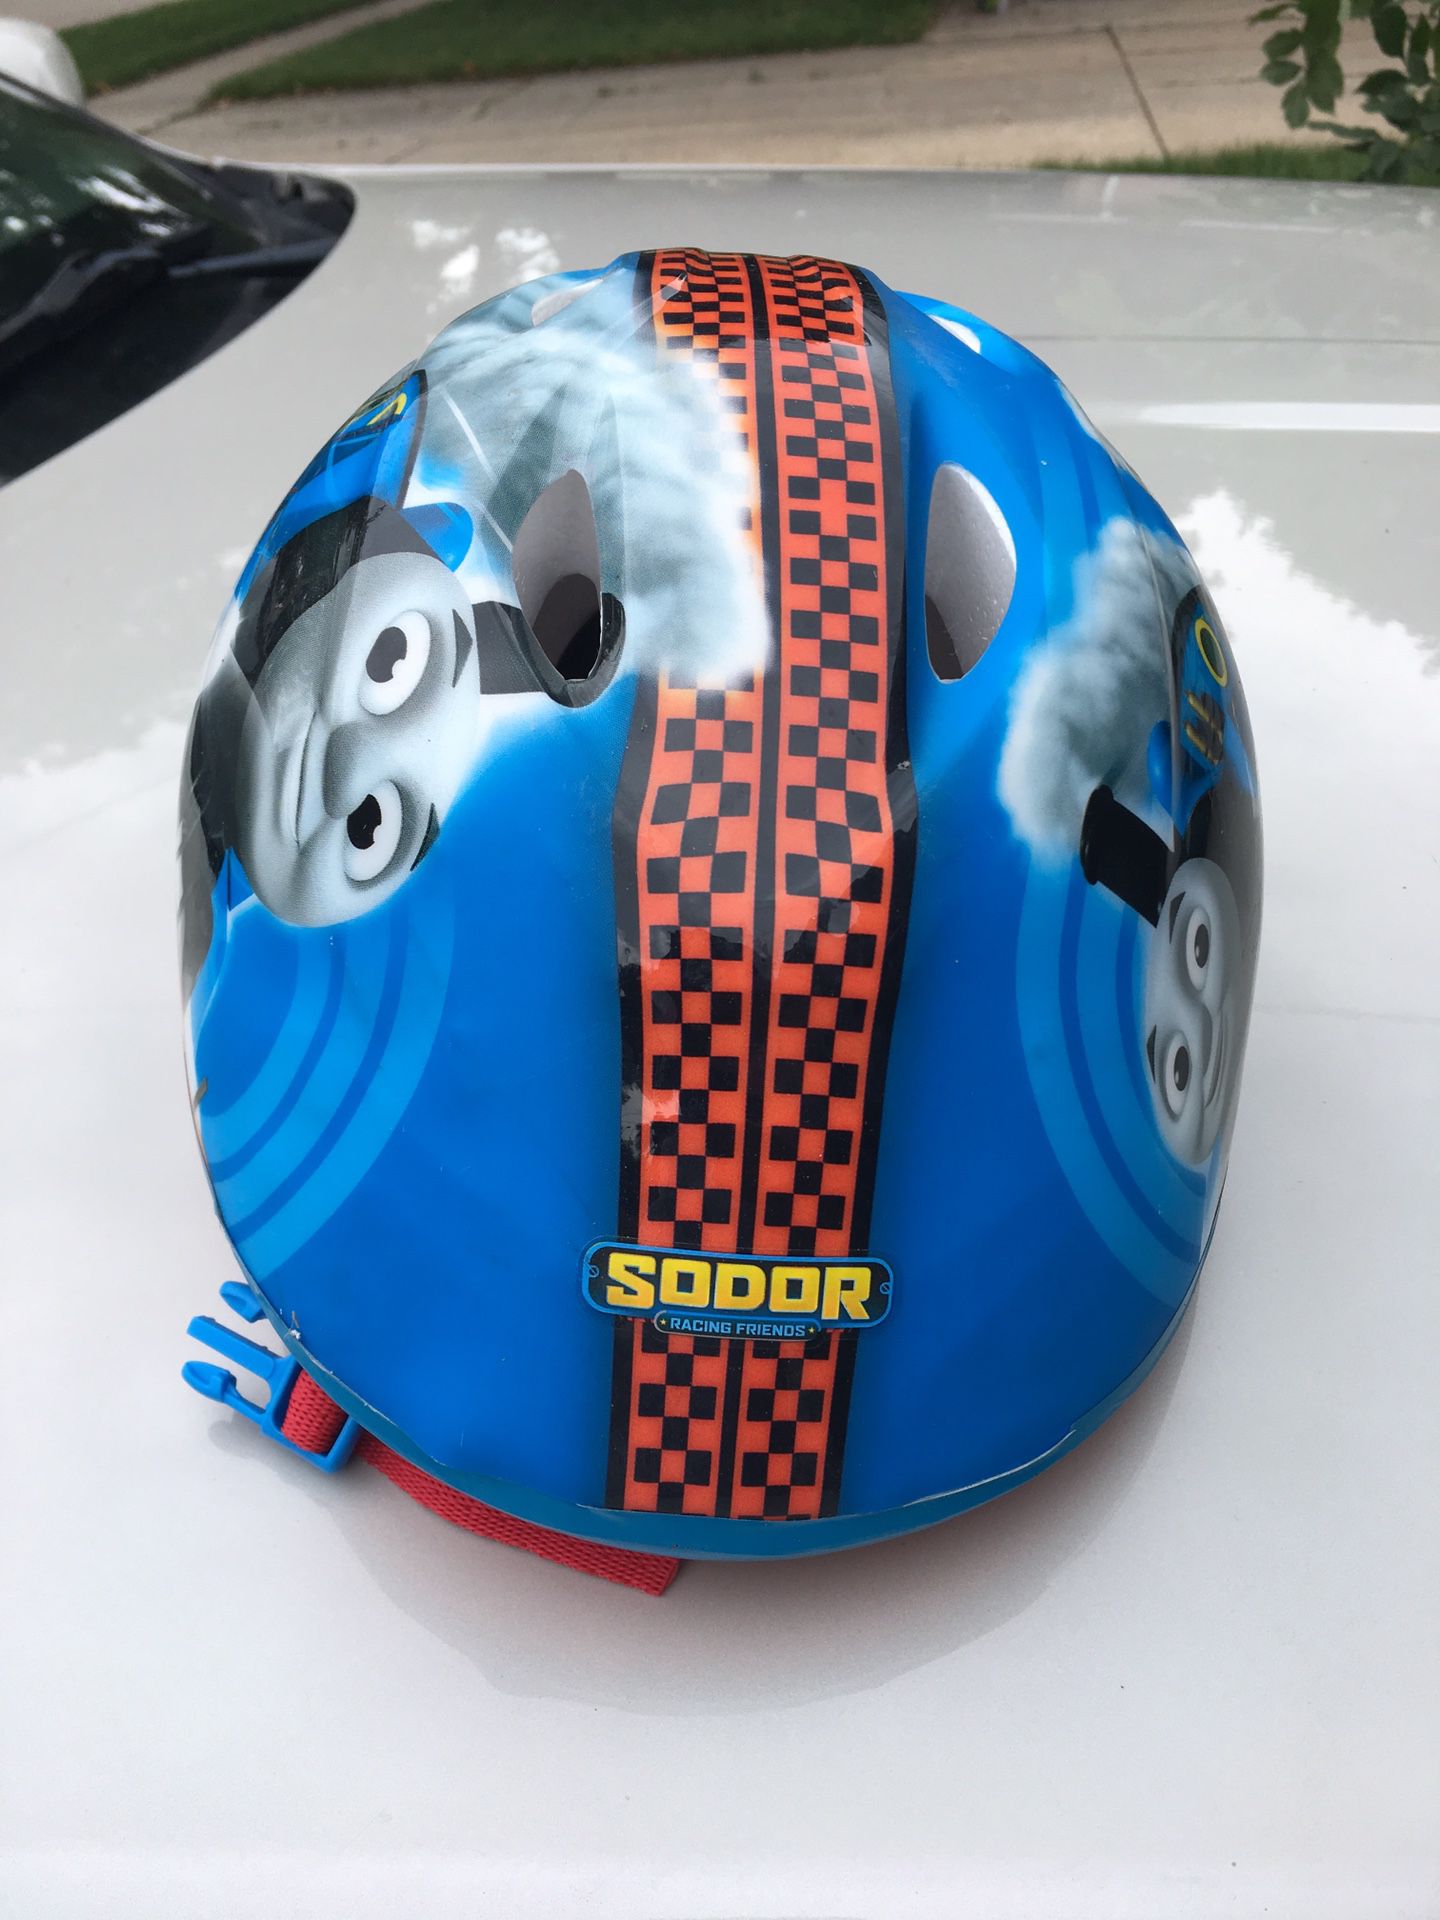 Thomas bike helmet